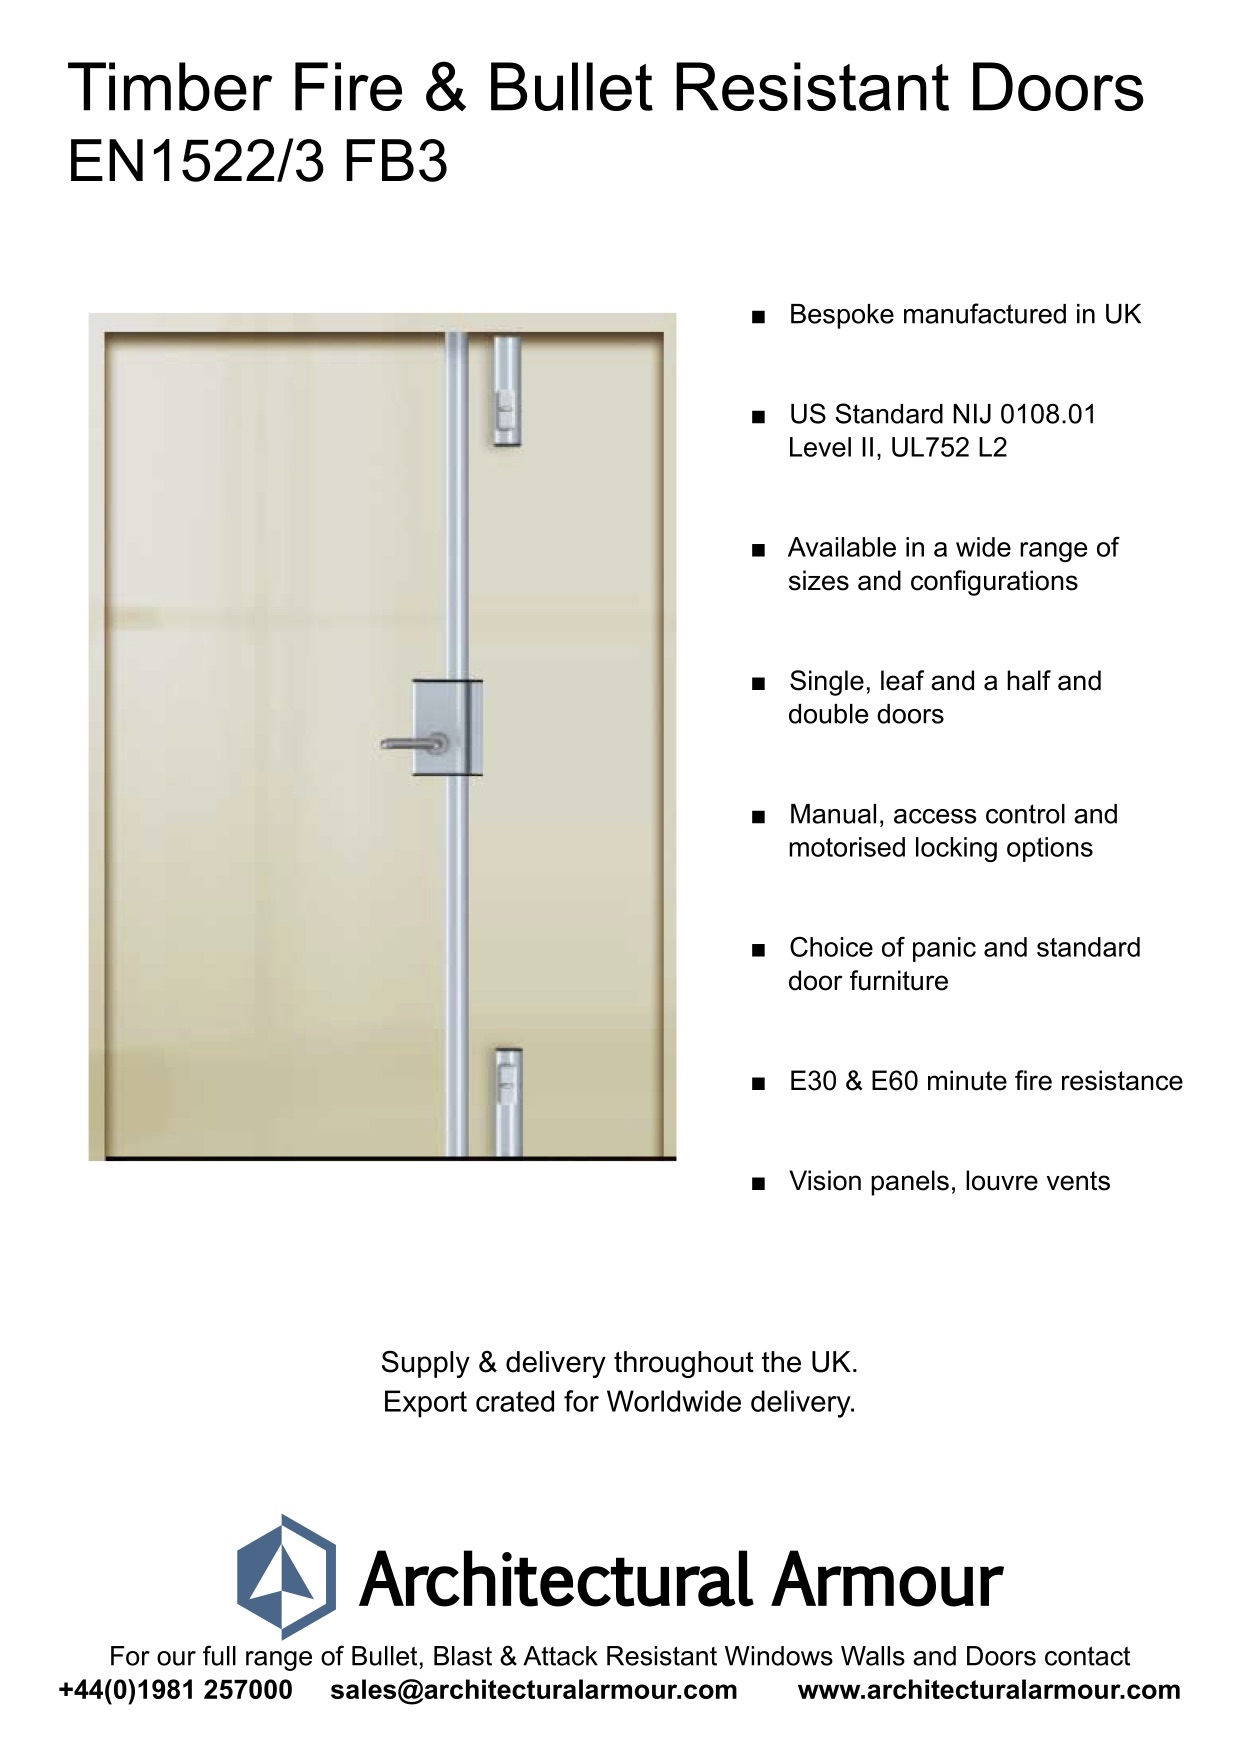 Fire-Resistant-and-Bullet-Resistant-EN1522-3-FB3-Timber-Doors